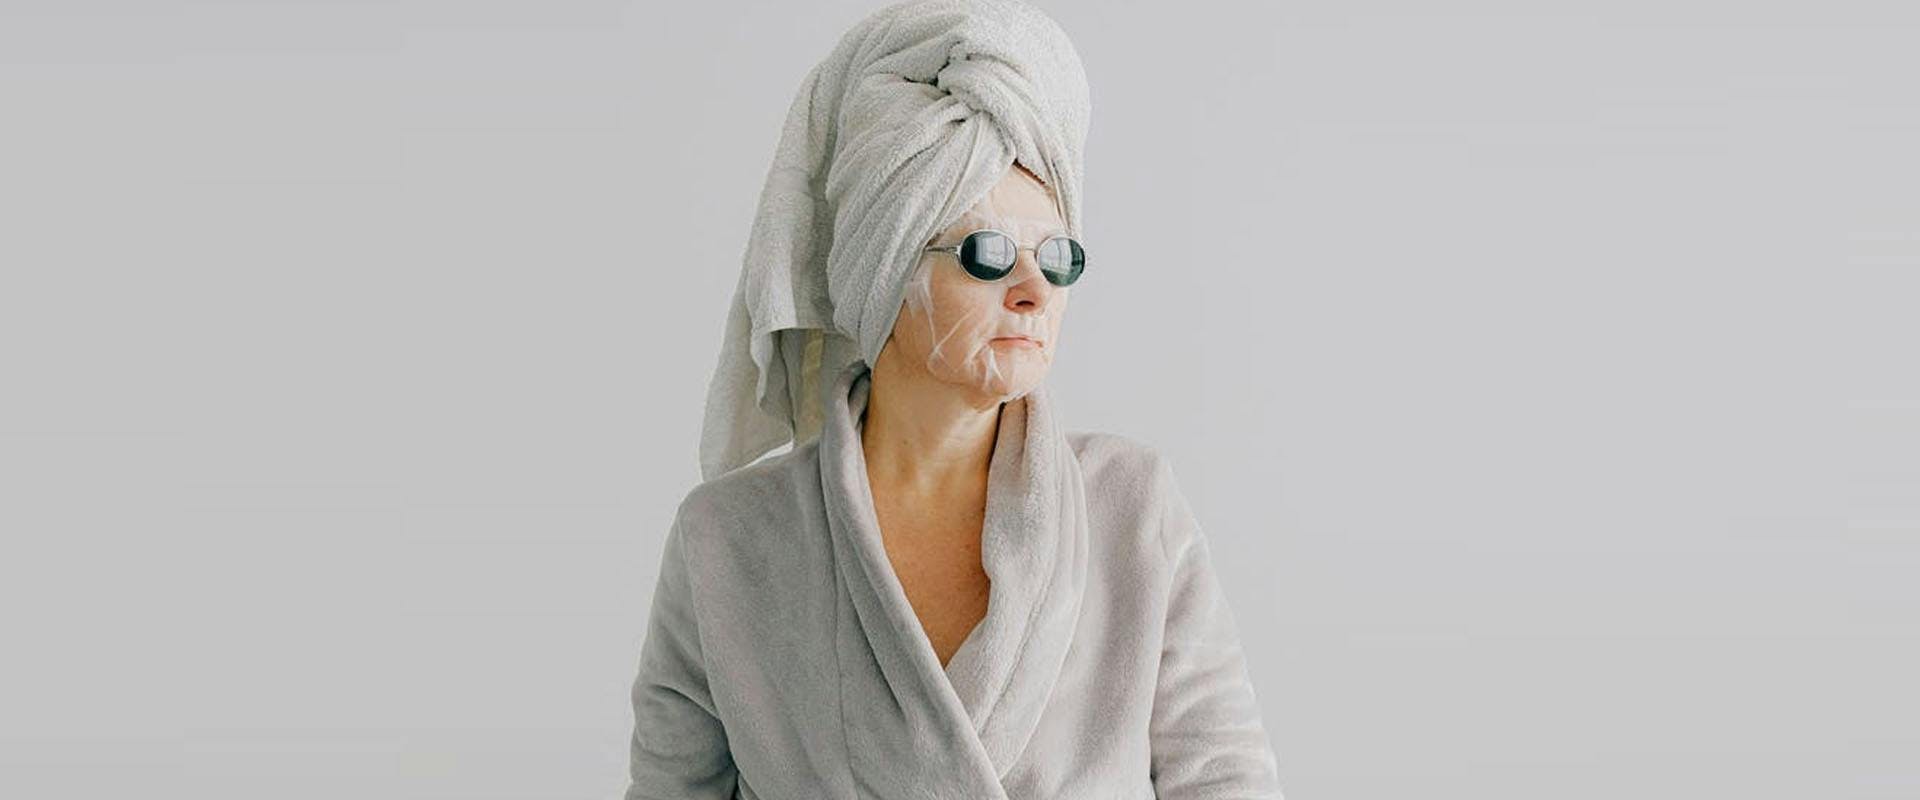 clothing sunglasses accessories home decor fashion sleeve robe headband long sleeve person